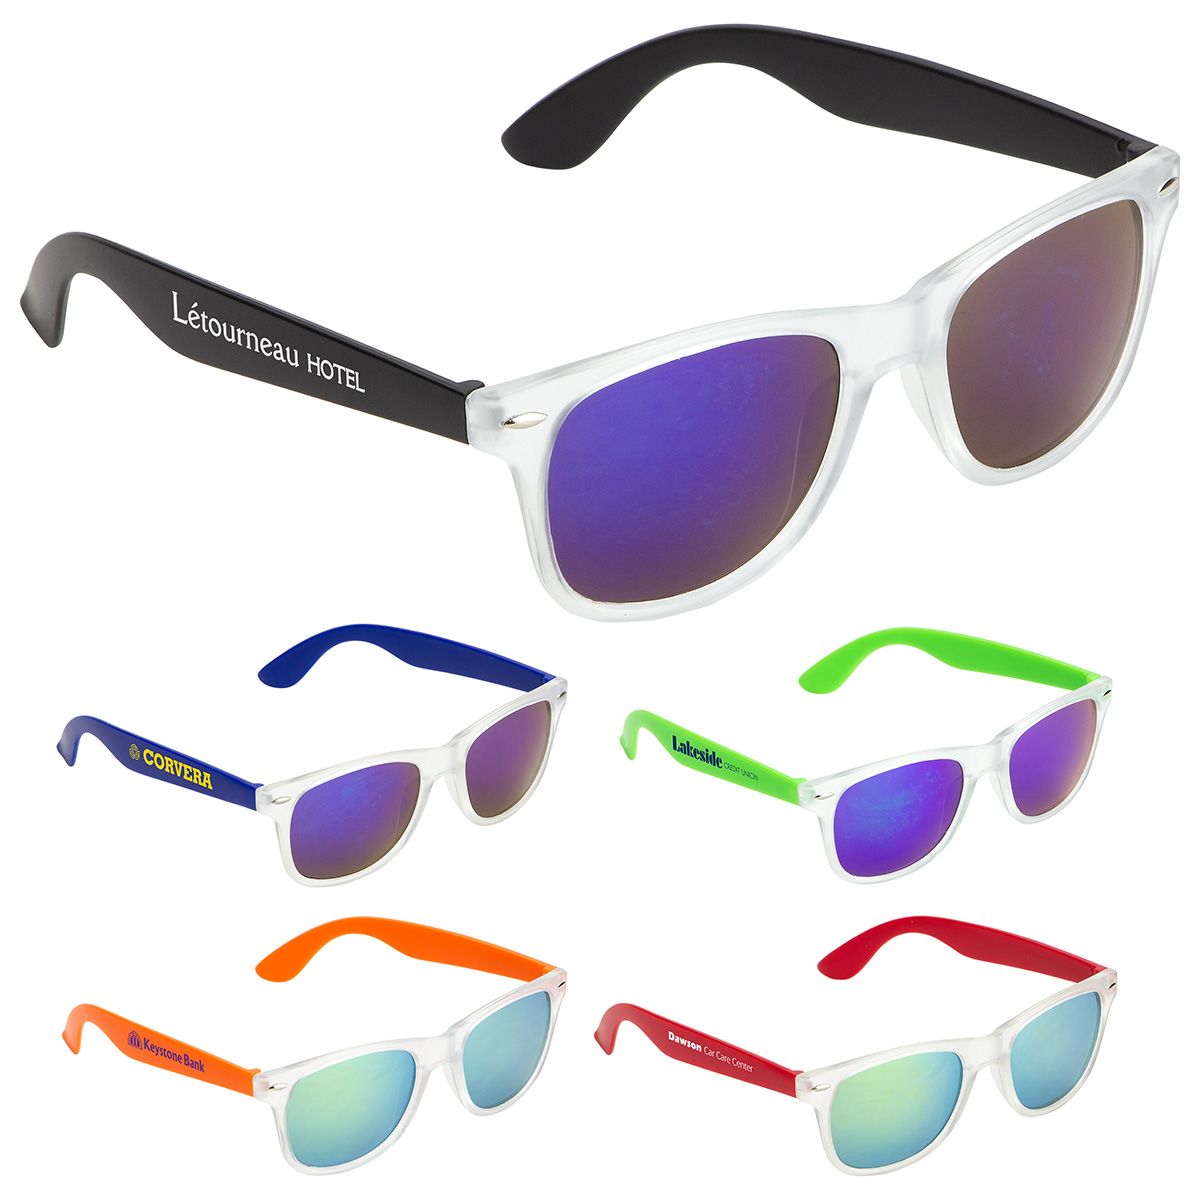 Sunglasses in multiple colors